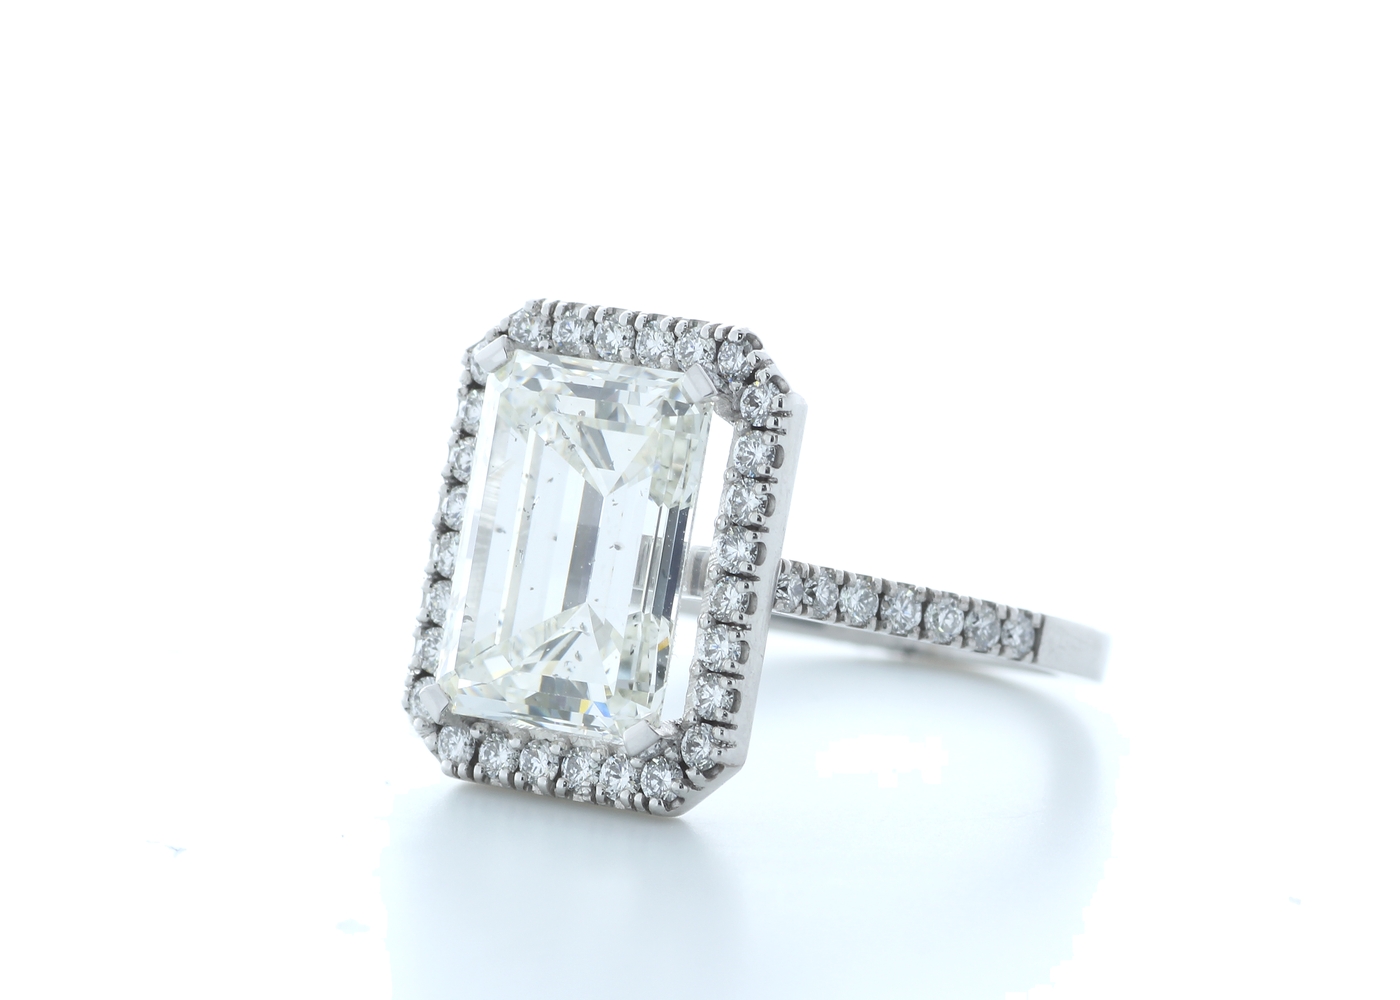 18k White Gold Emerald Cut Halo Diamond Ring 5.85 Carats - Image 2 of 5